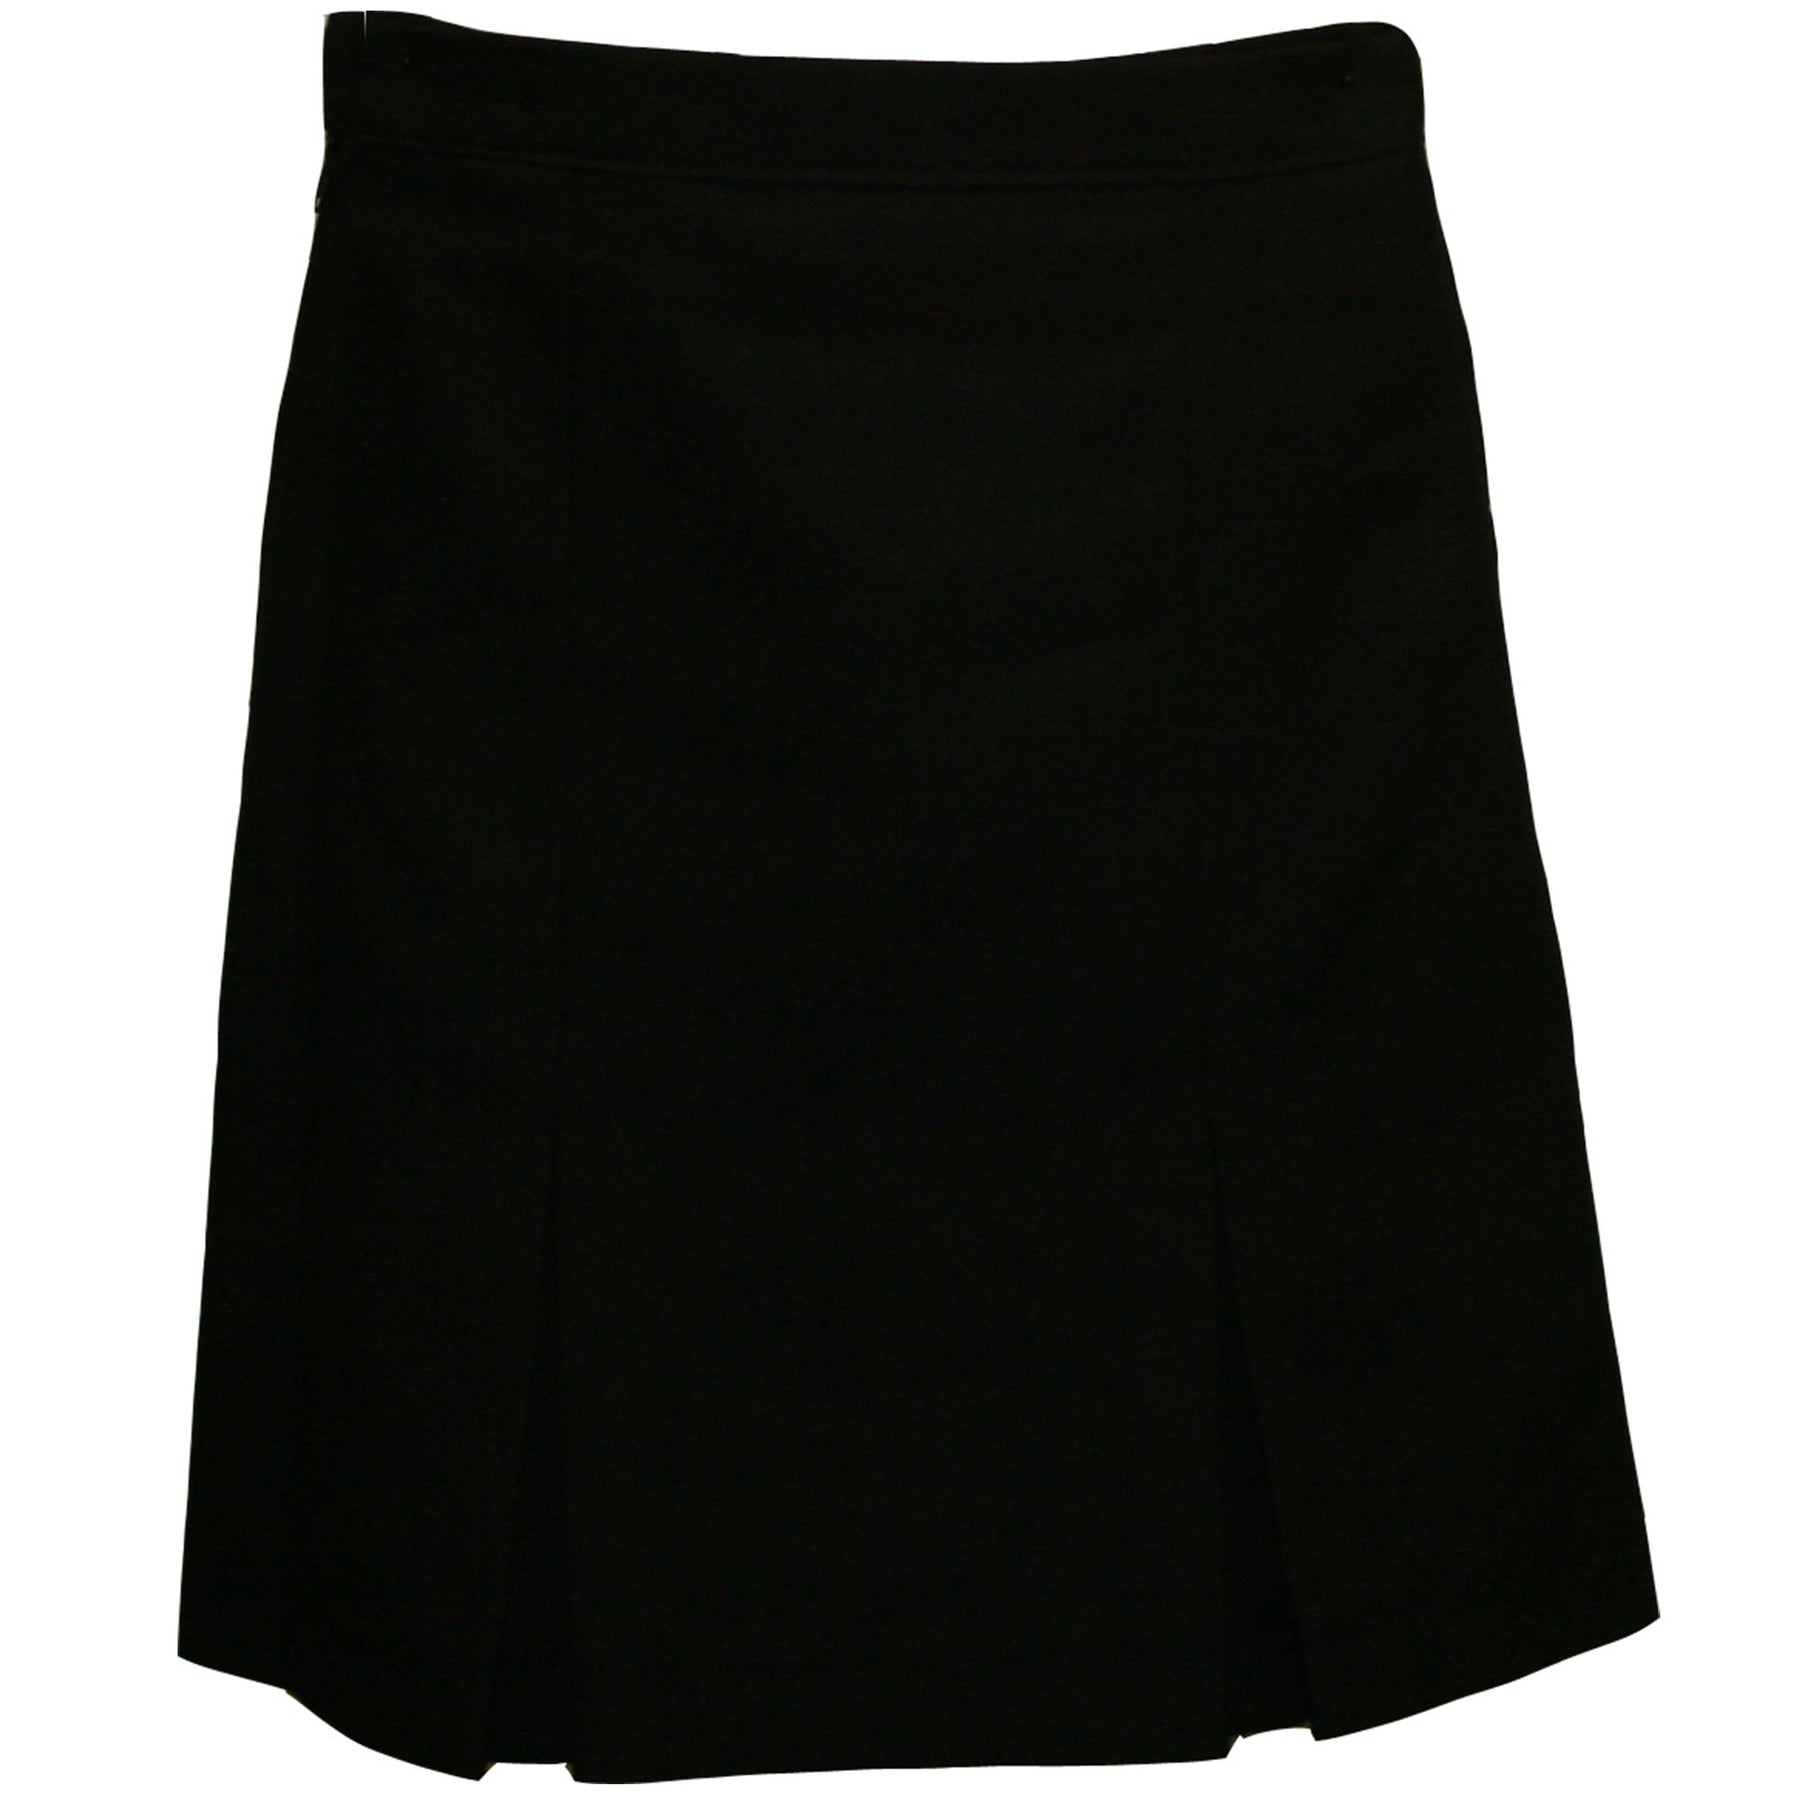 Great Marlow School Skirt